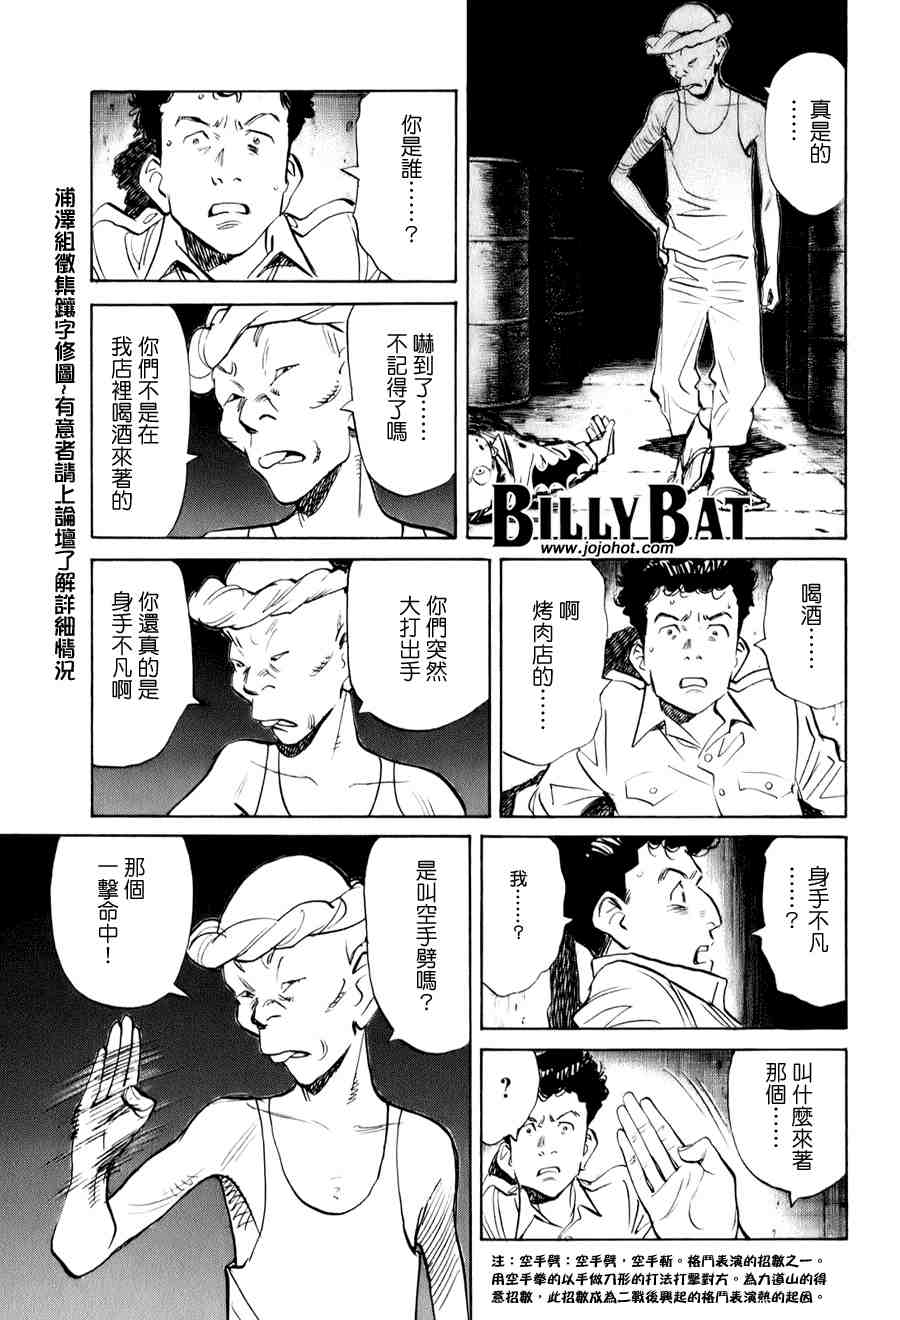 Billy_Bat - 第1卷(2/4) - 5